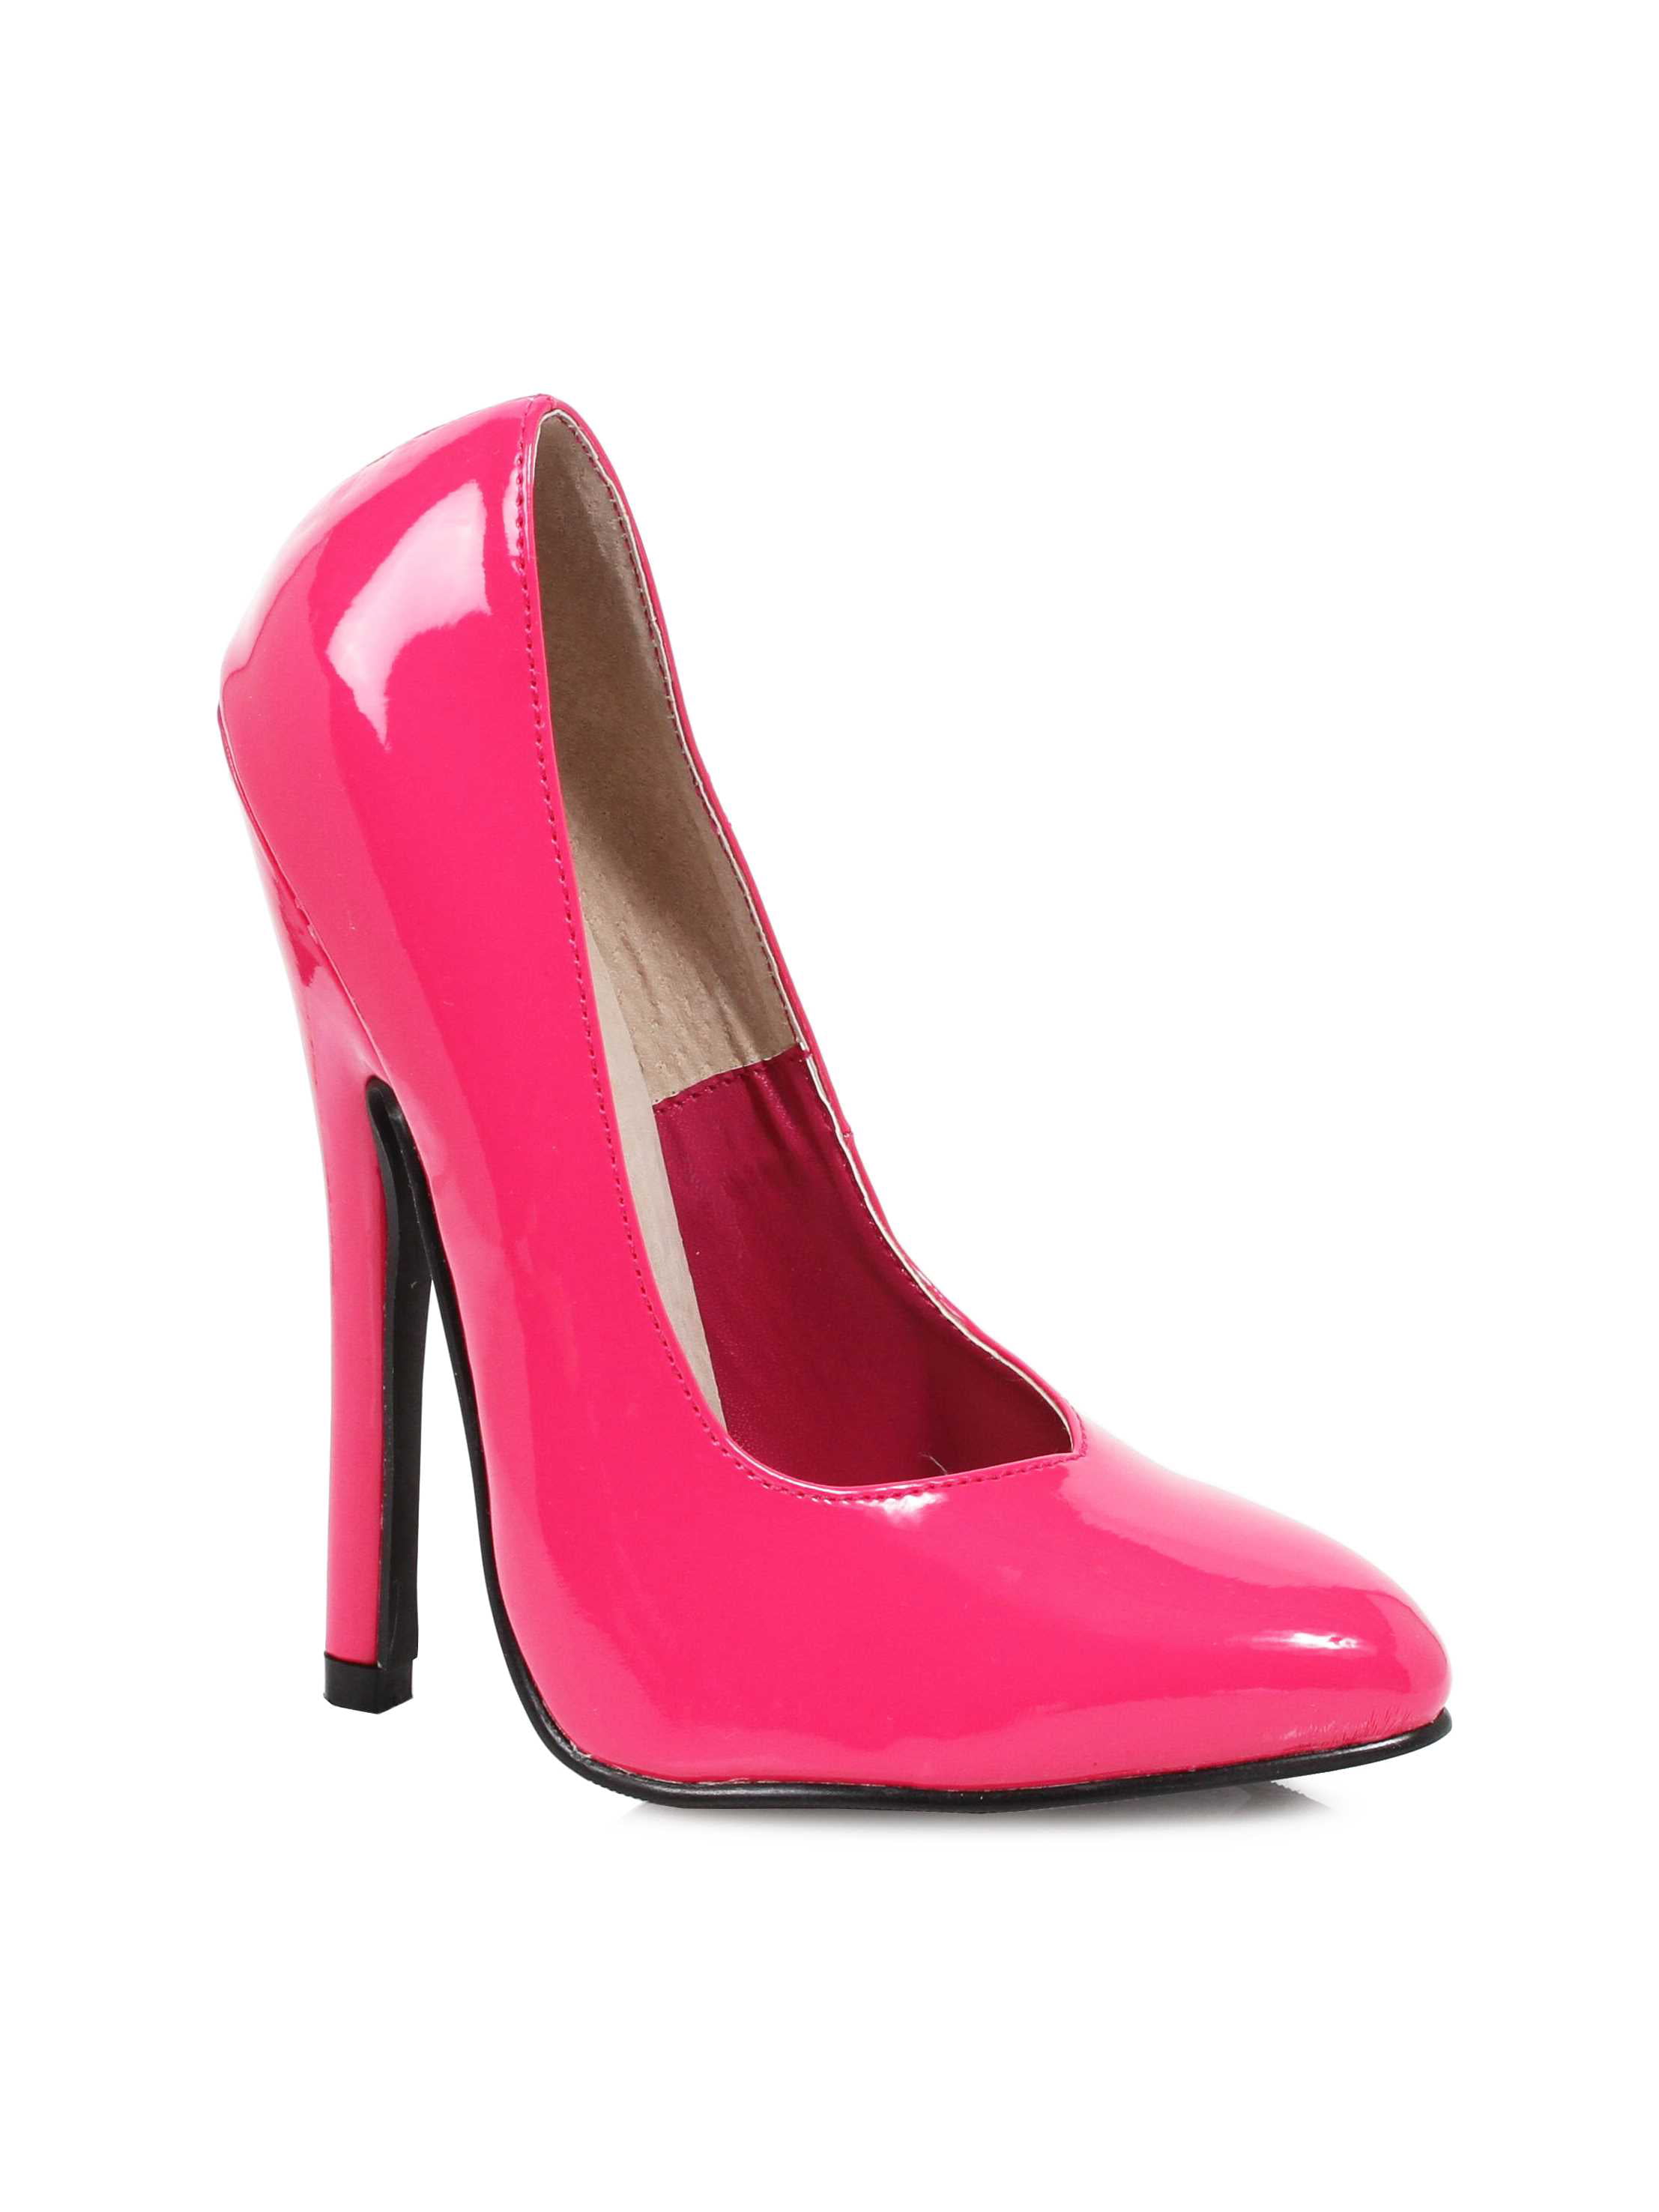 Woman High Heels Women Shoes Pumps Stilettos Shoes for Women Wedding Shoes Stitching Color Sandals,red,6 